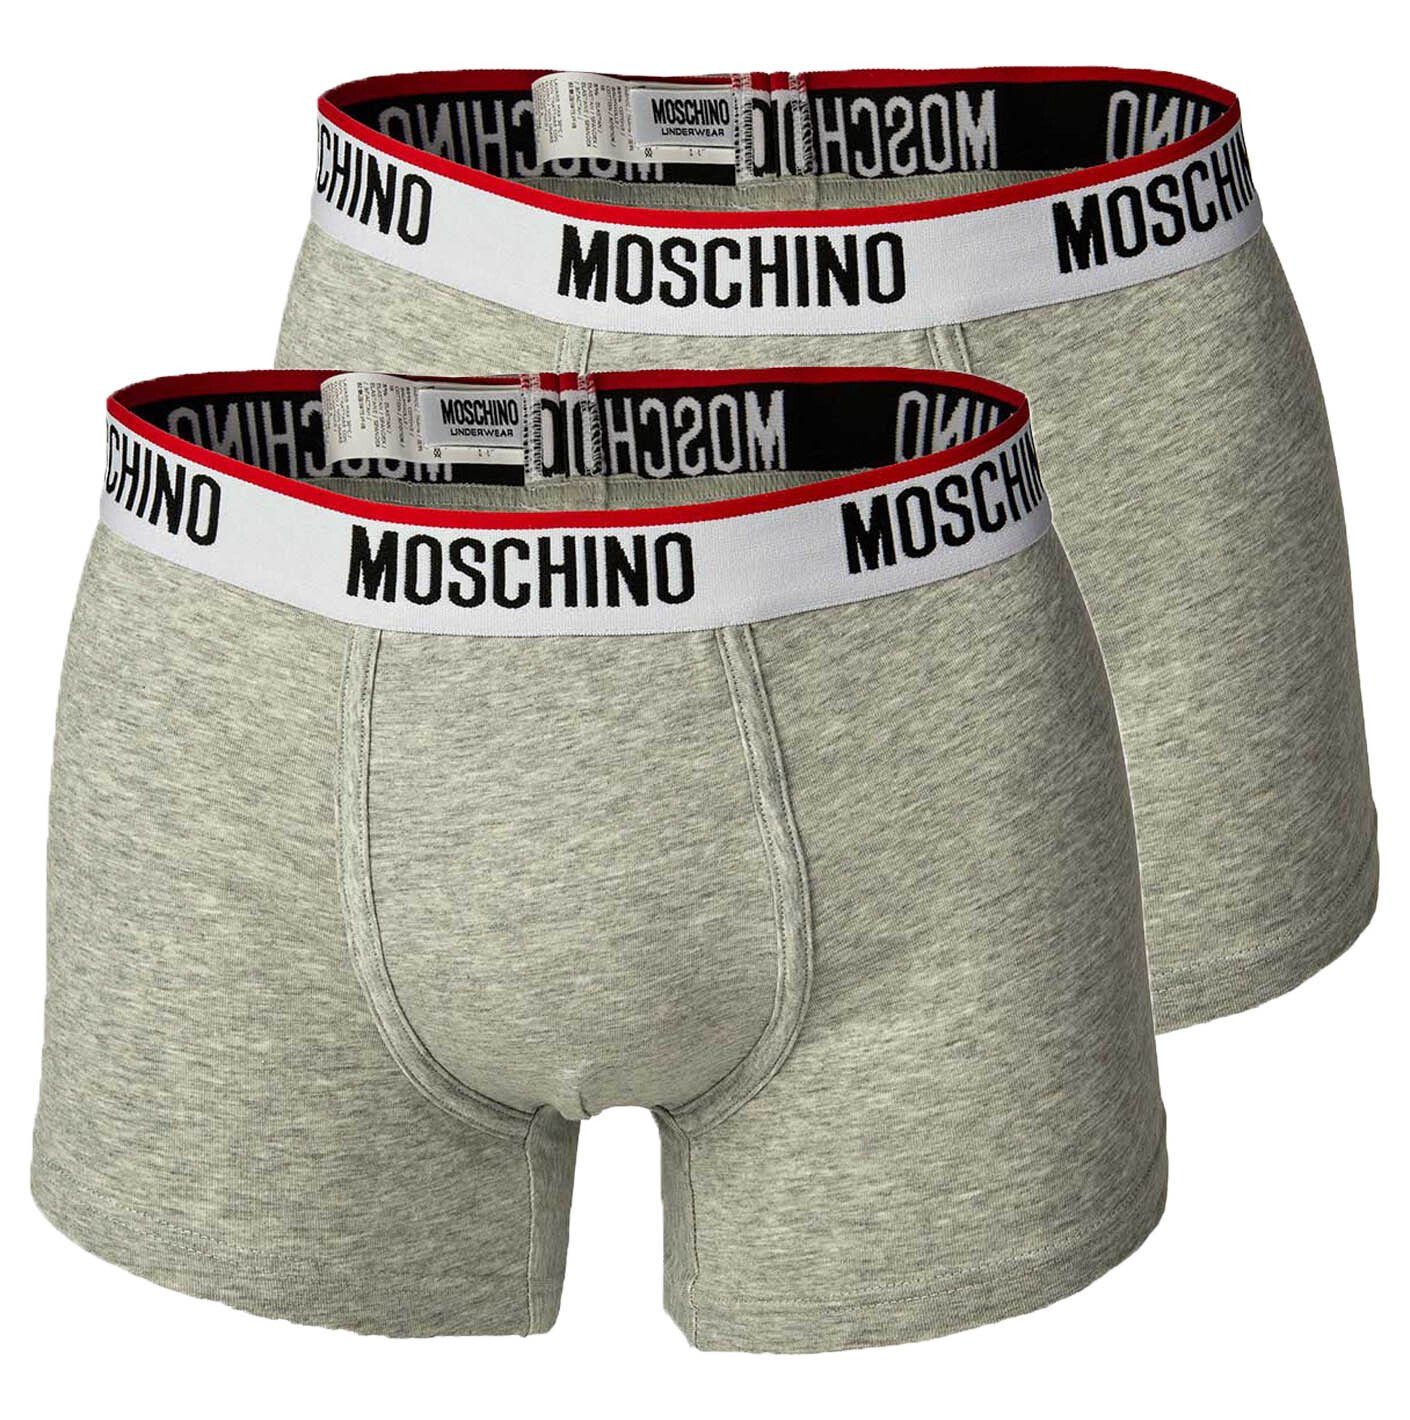 Moschino Boxer Herren Trunks 2er Pack - Boxershorts, Unterhose Grau